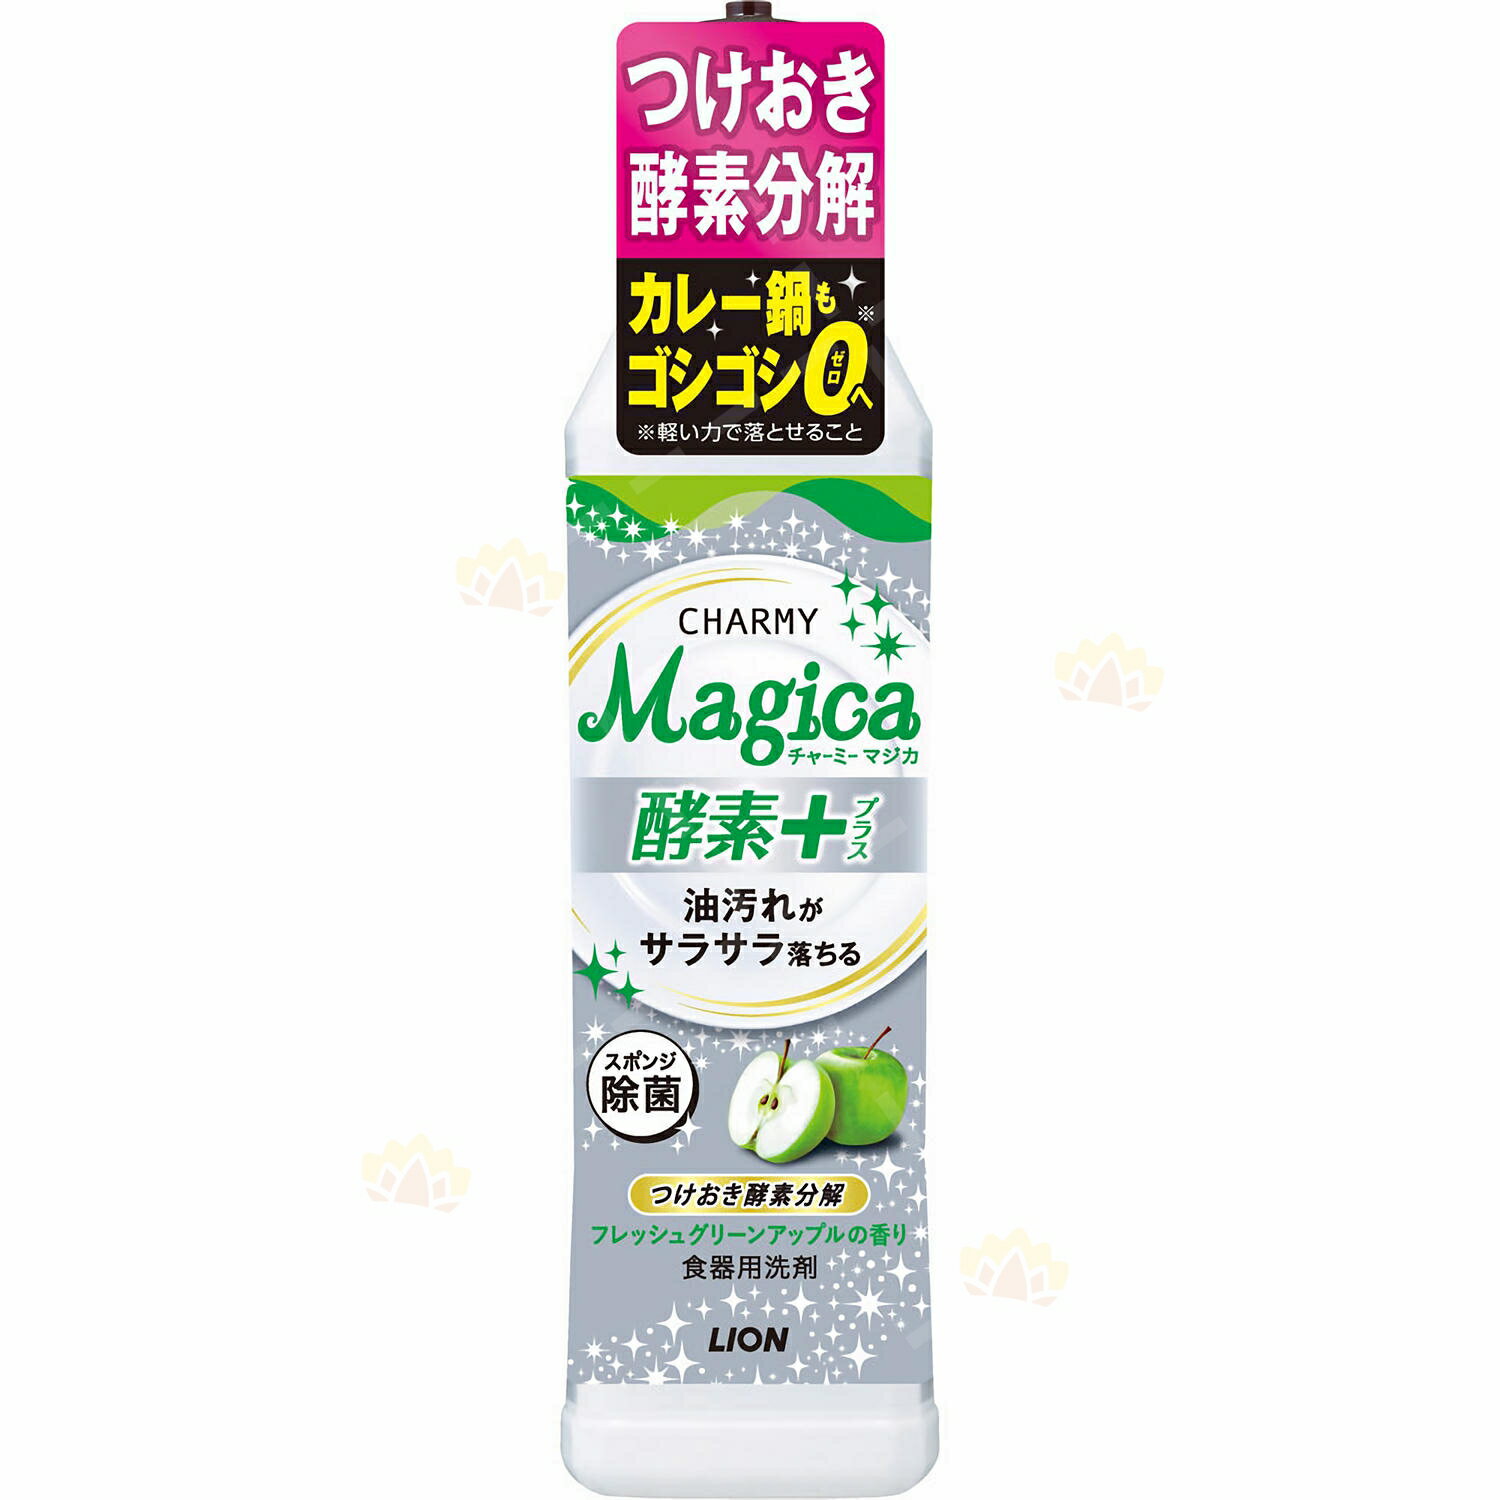 CHARMY Magica 酵素＋ フレッシュグリーンアップルの香り 本体 220ml 台所用品